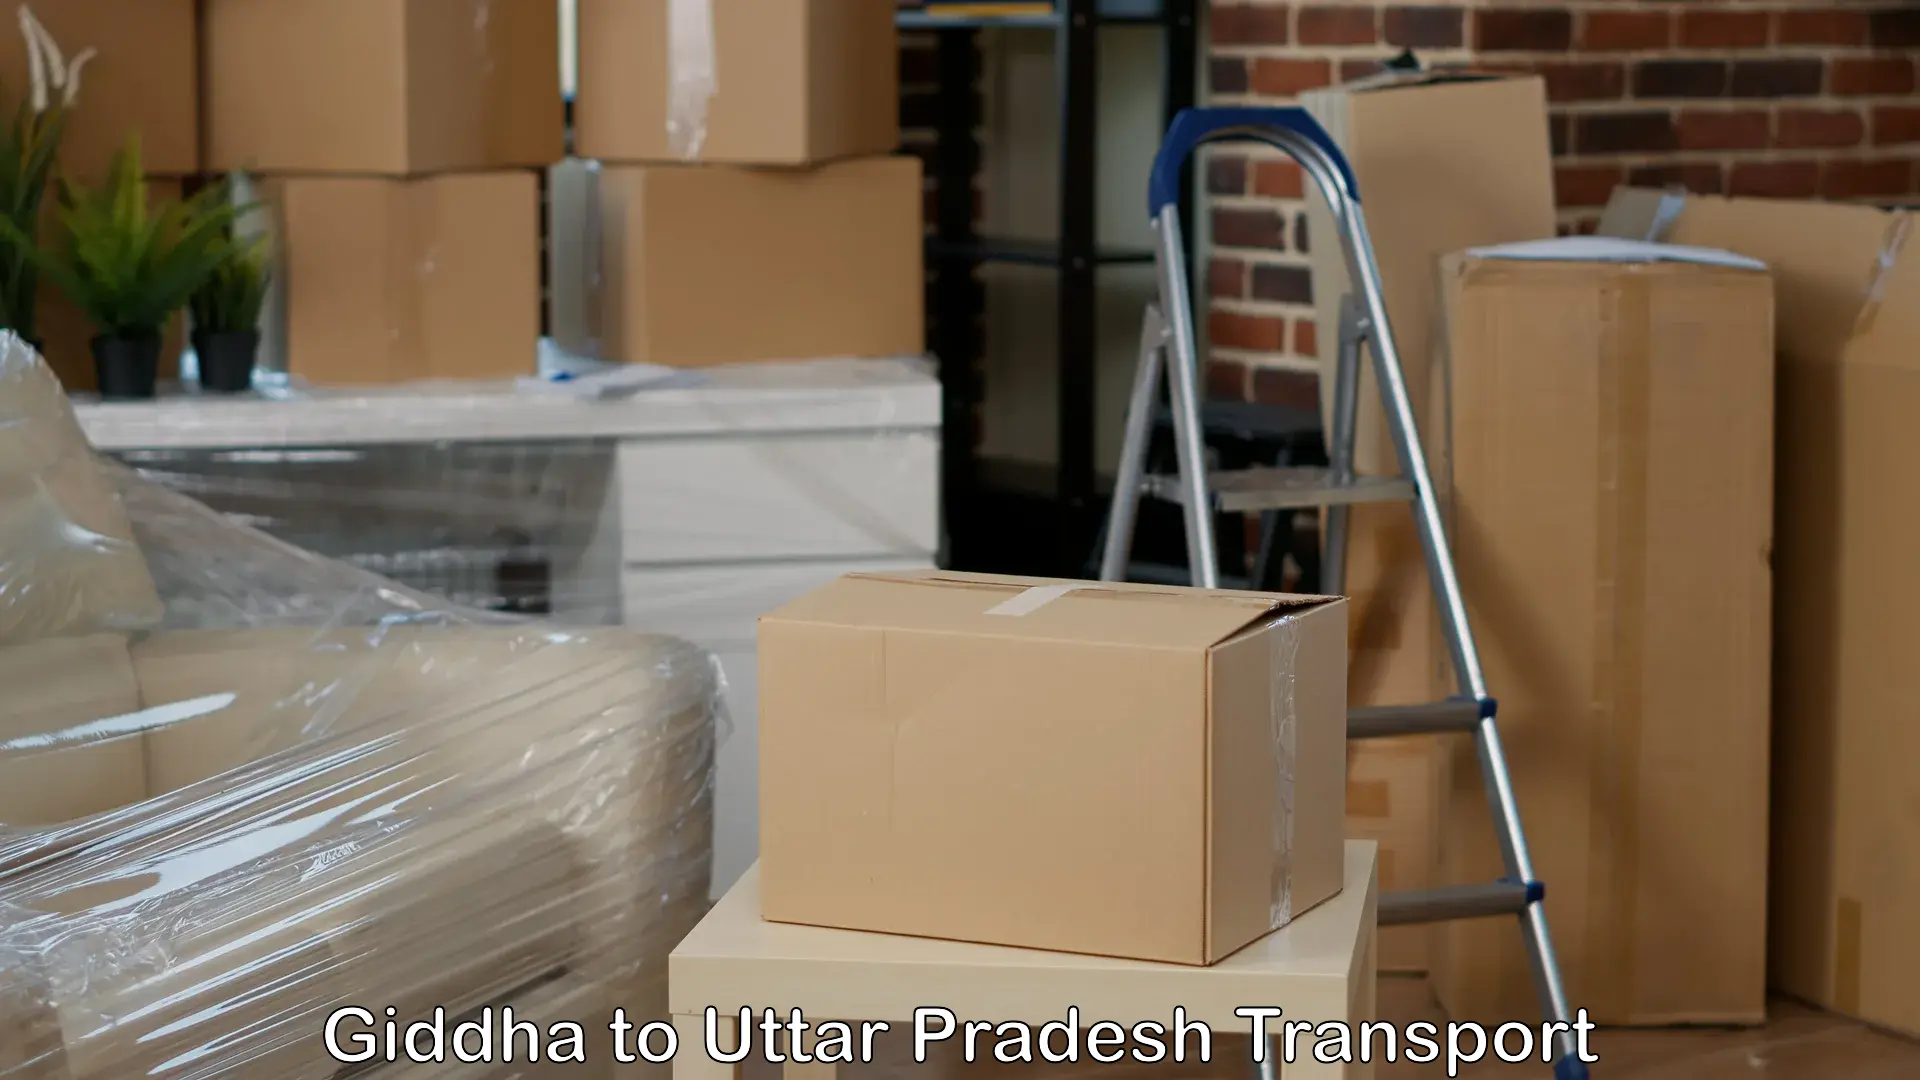 Shipping partner Giddha to Muzaffarnagar